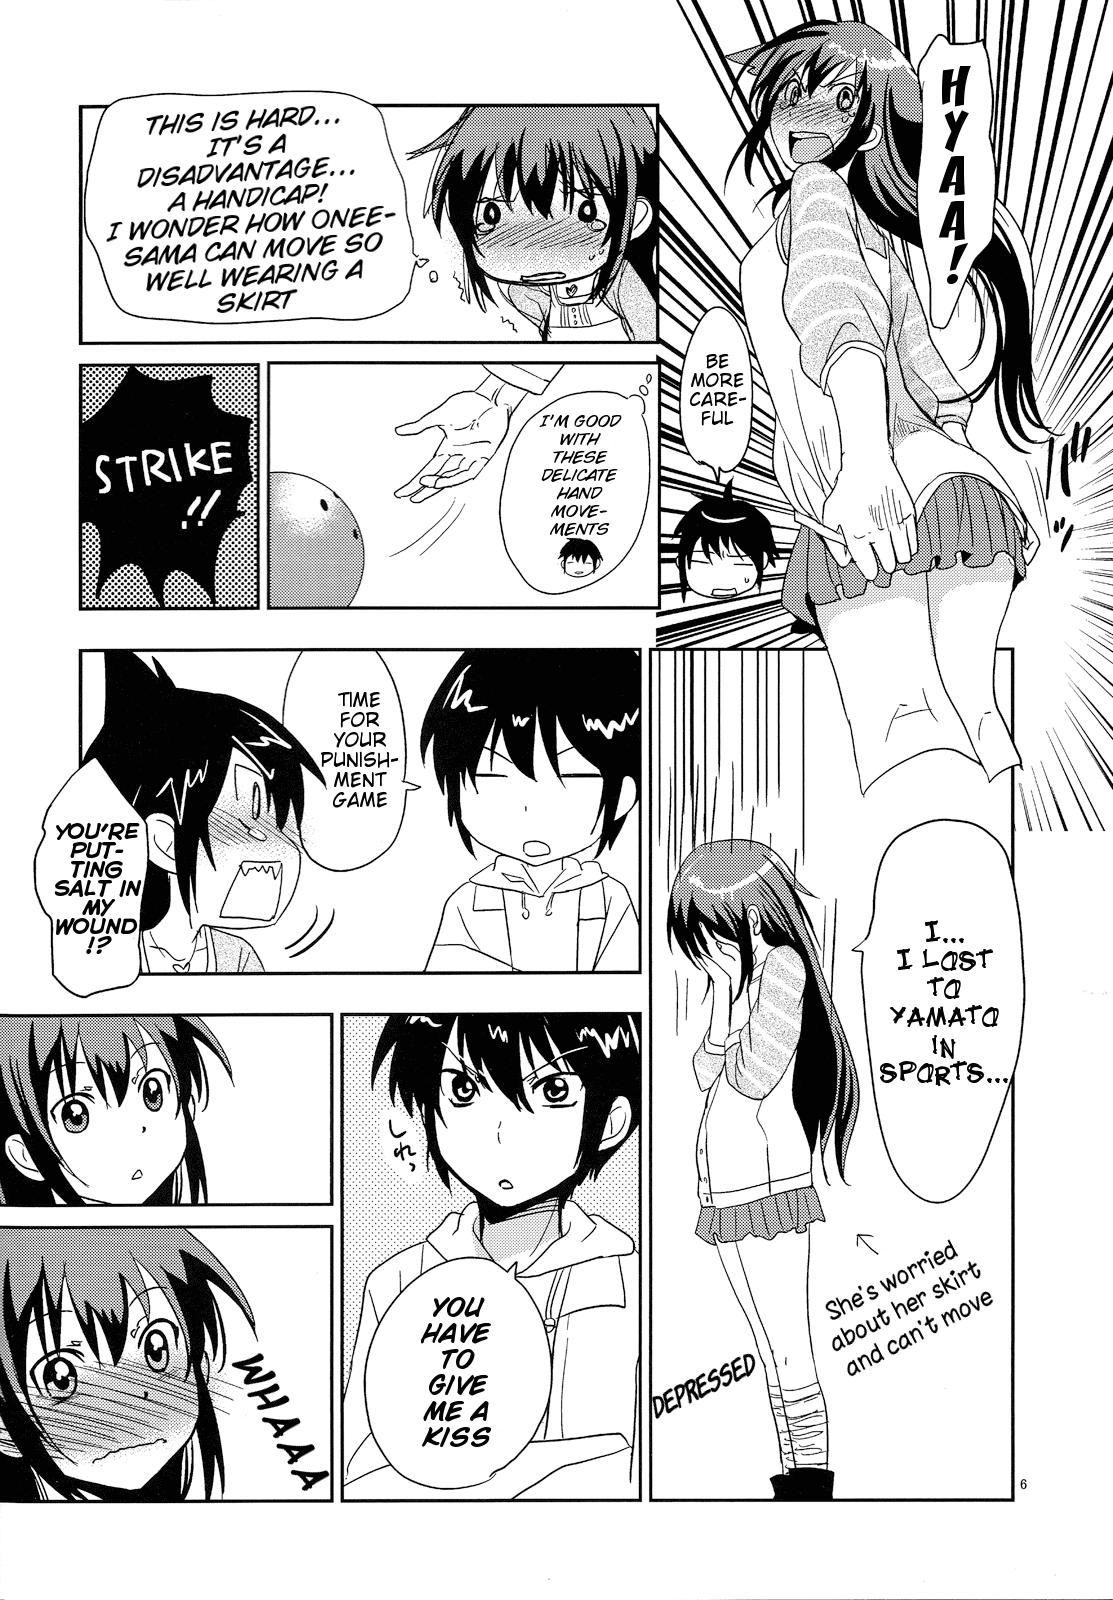 Hot Girl A Date with Wanko! - Maji de watashi ni koi shinasai Analfucking - Page 7